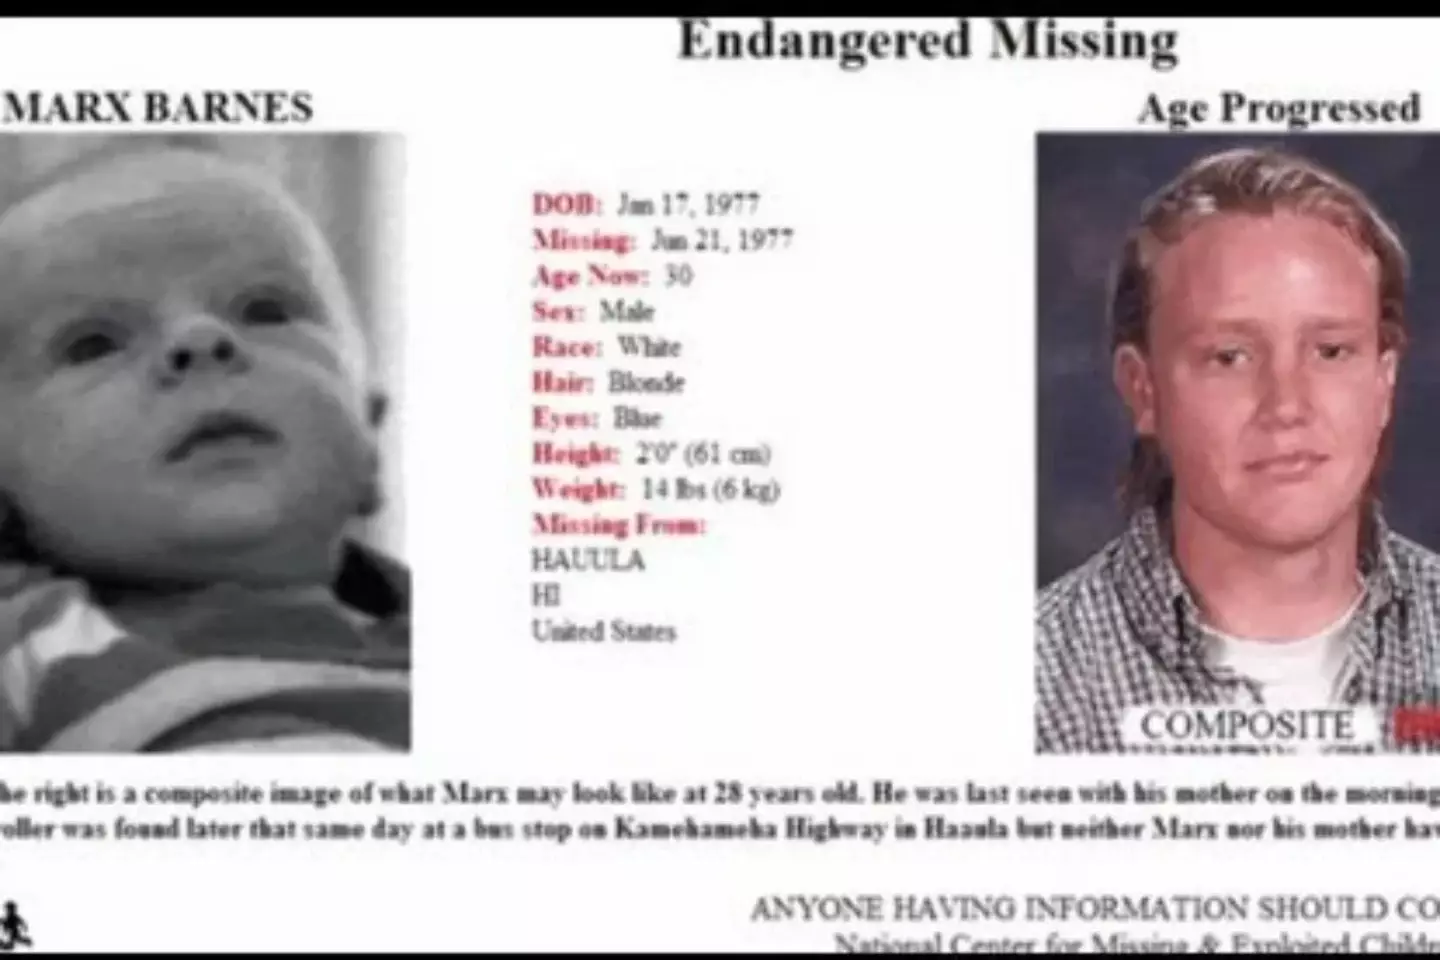 The poster Steve Carter found on the missing children's website. (MissingKids.com)